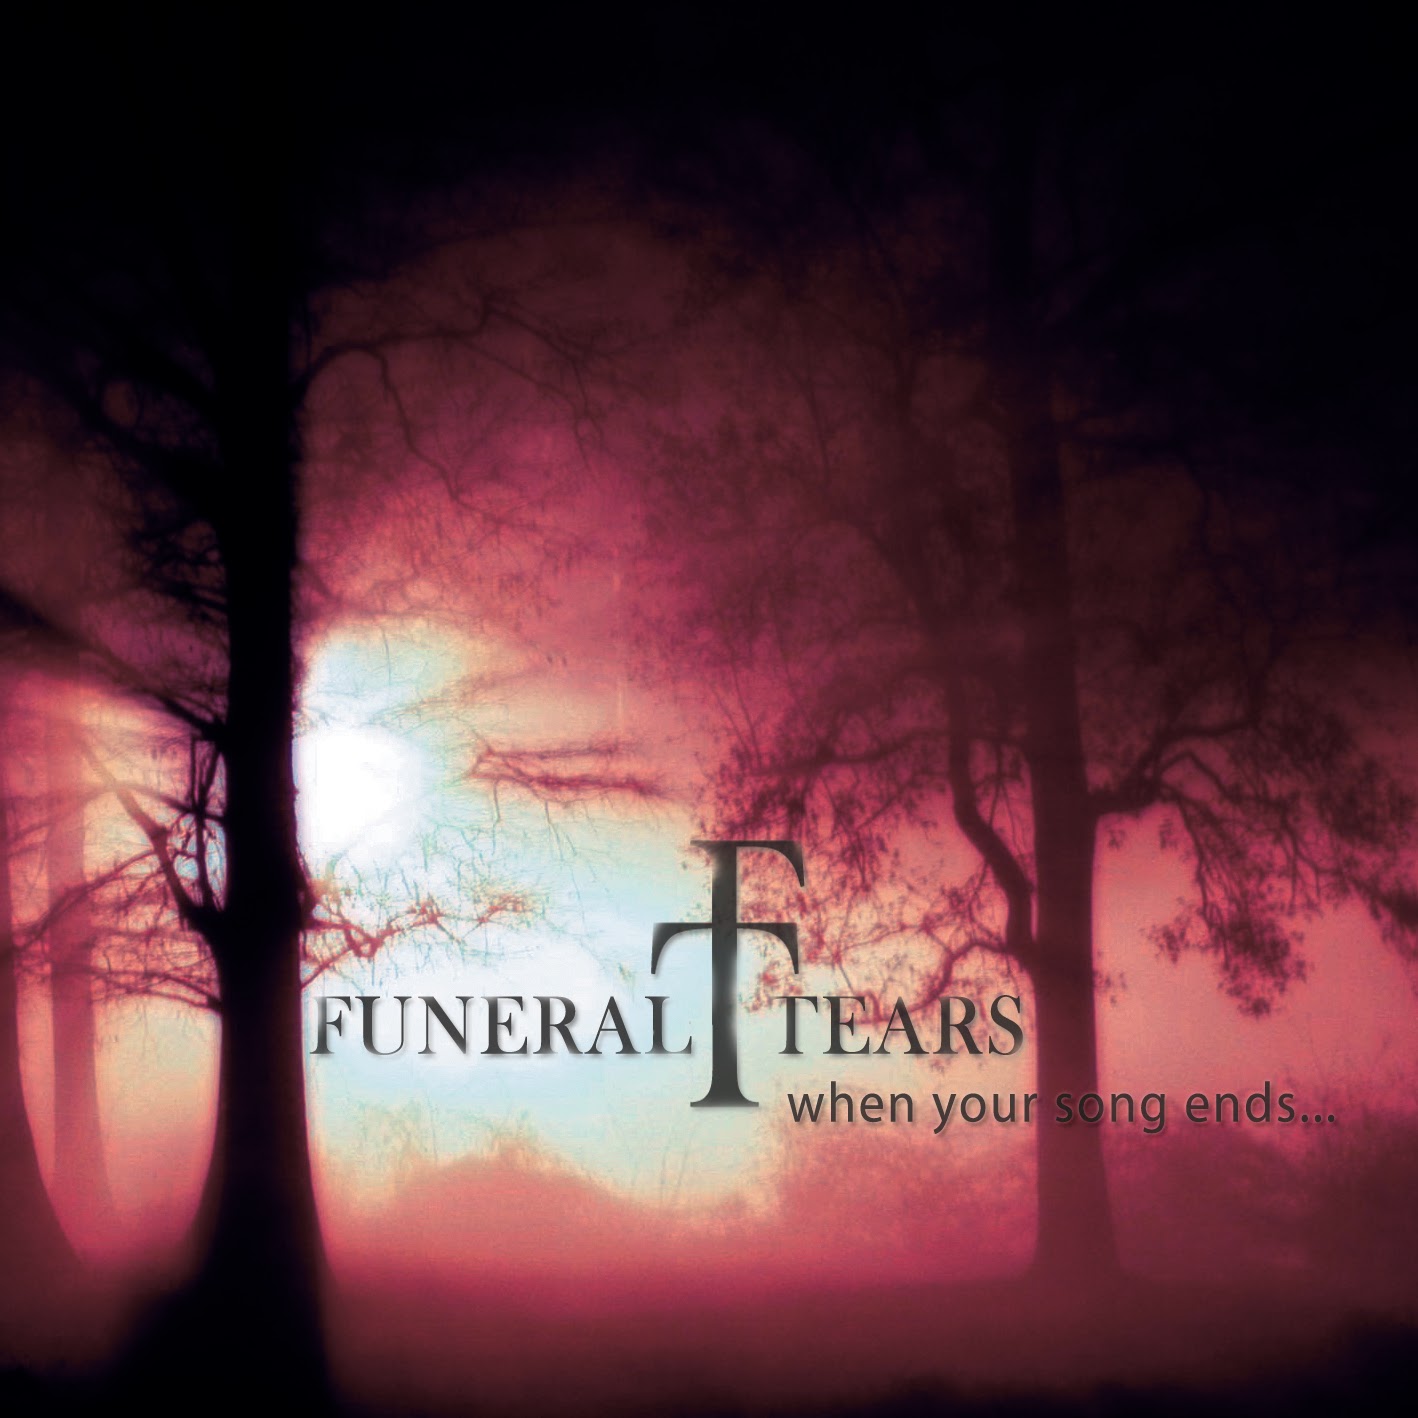 Funeral song перевод